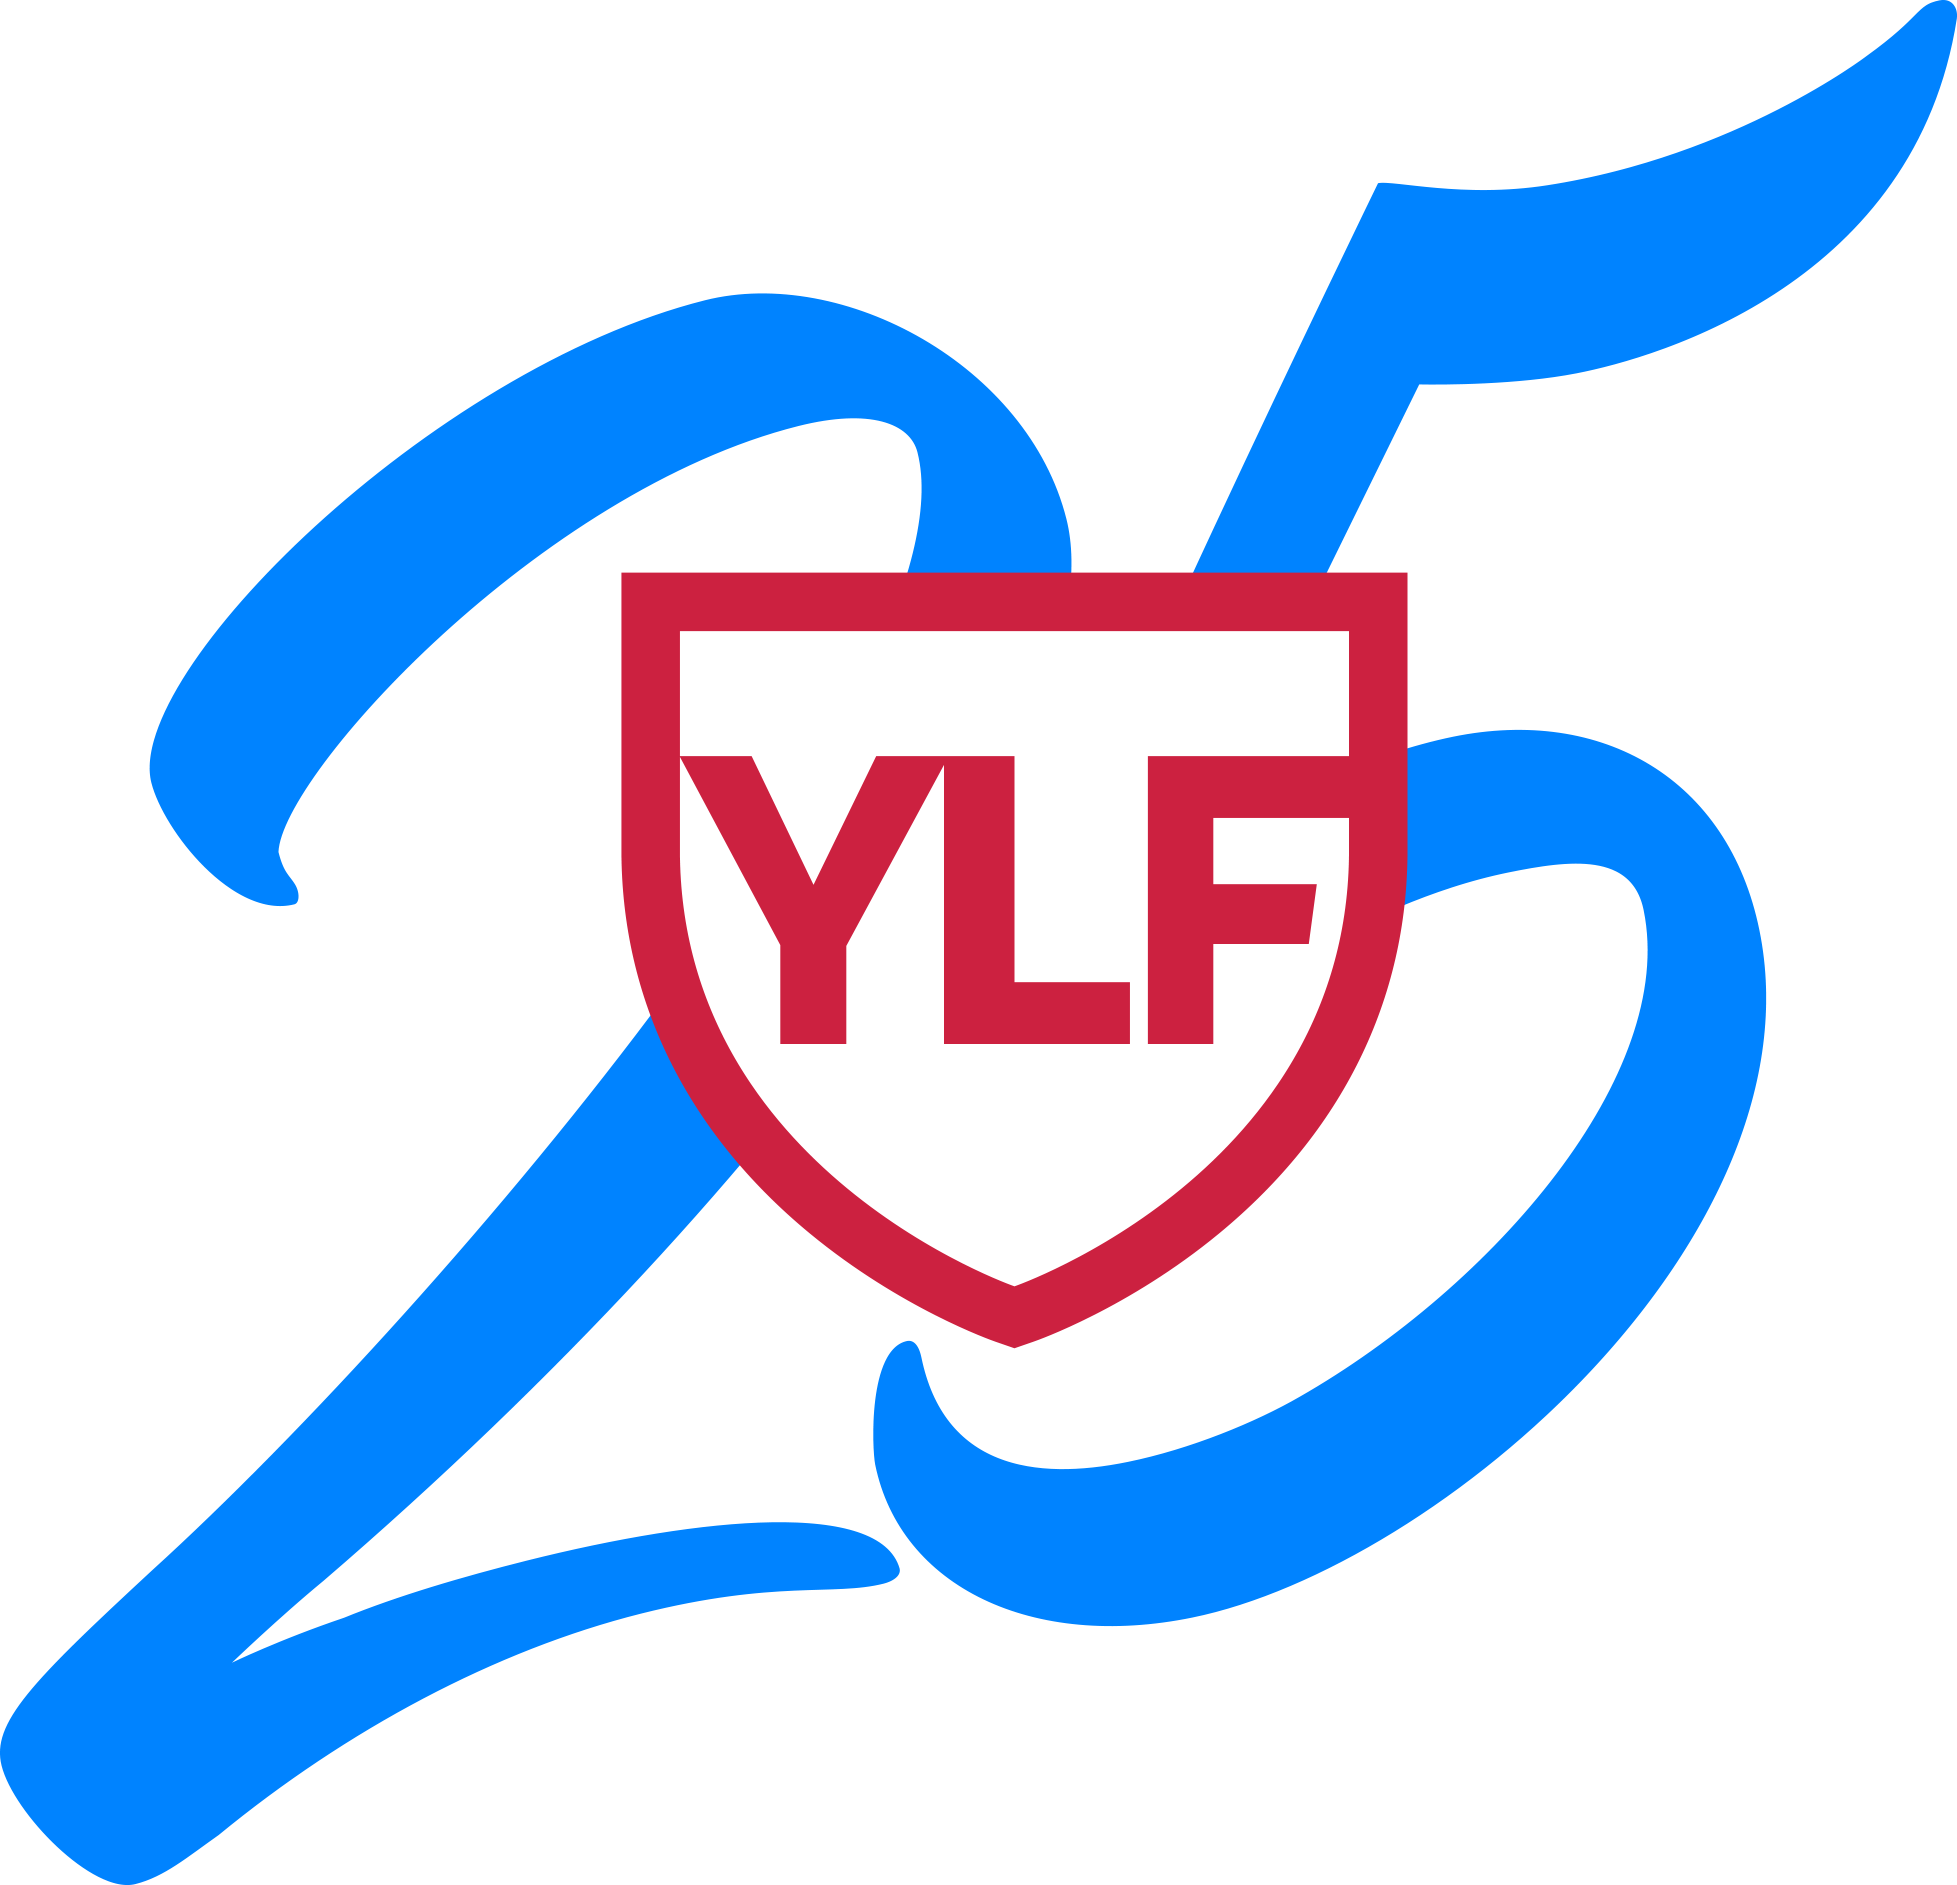 Youth Leadership Foundation 25th Anniversary logo design